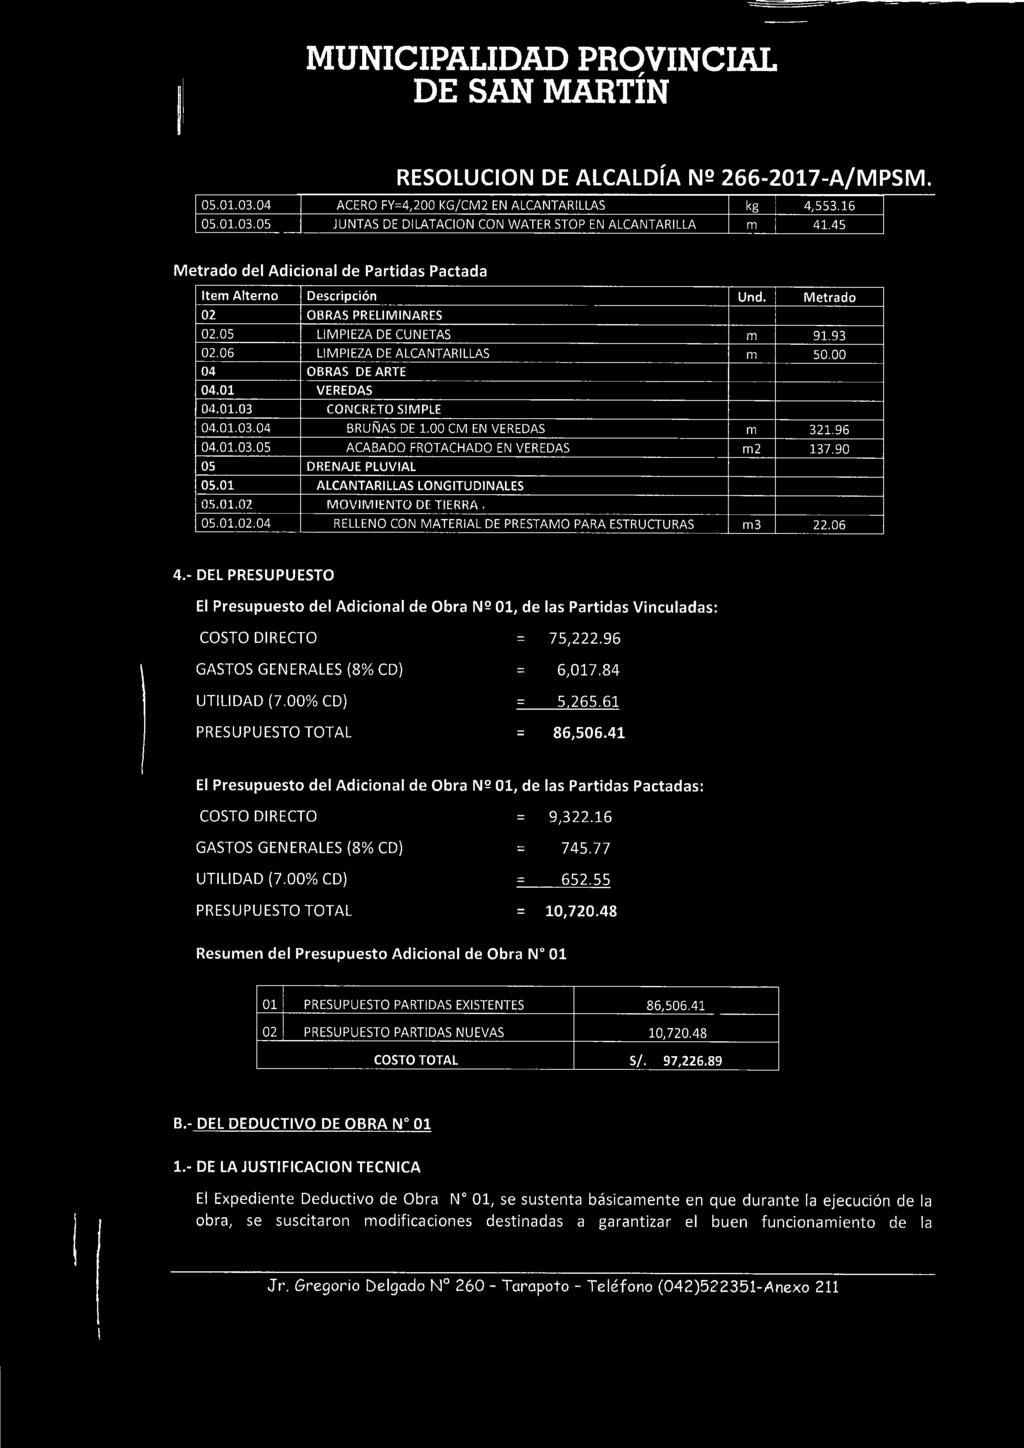 06 LIM PIEZA DE ALCANTARILLAS m 50.00 04 O BRAS DE ARTE 0 4.0 1 V E R E D A S 04.01.03 CONCRETO SIM PLE 04.01.03.04 BRUÑAS DE 1.